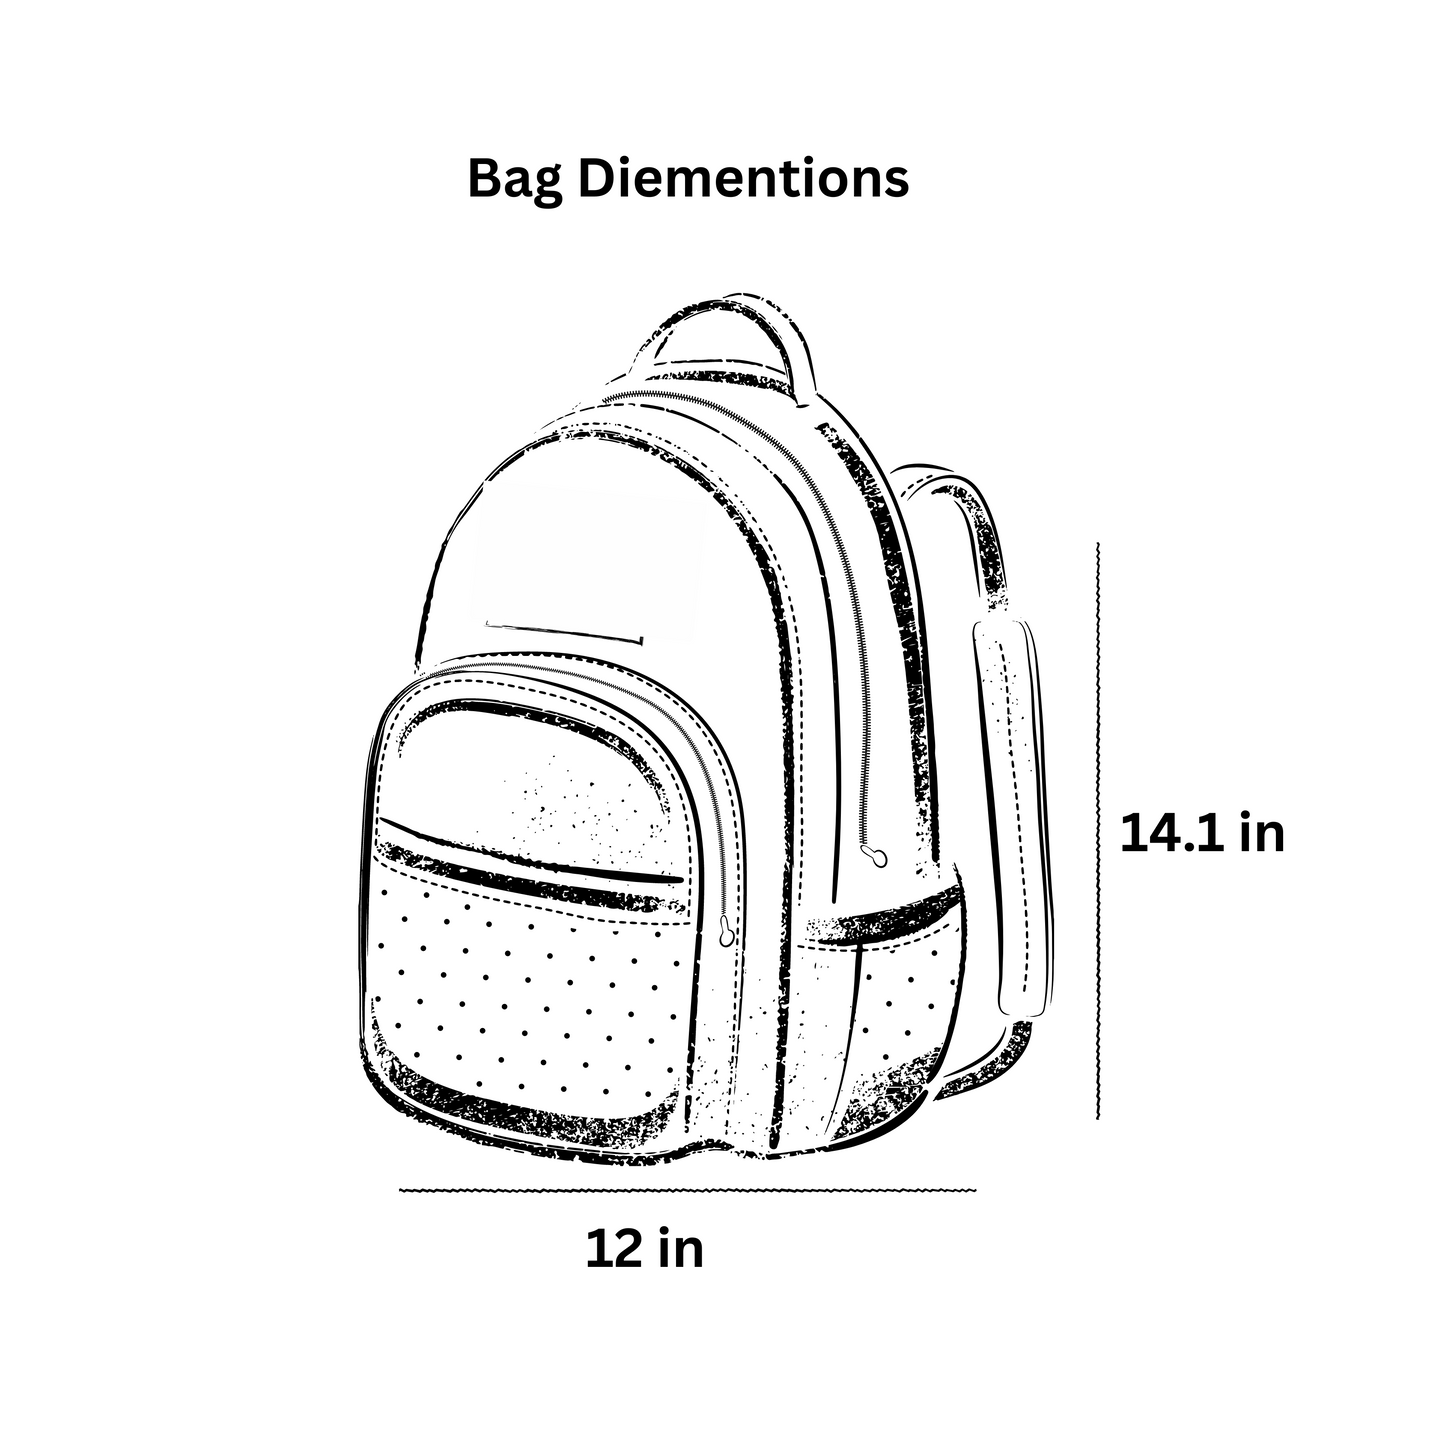 Hemp Backpack- Small